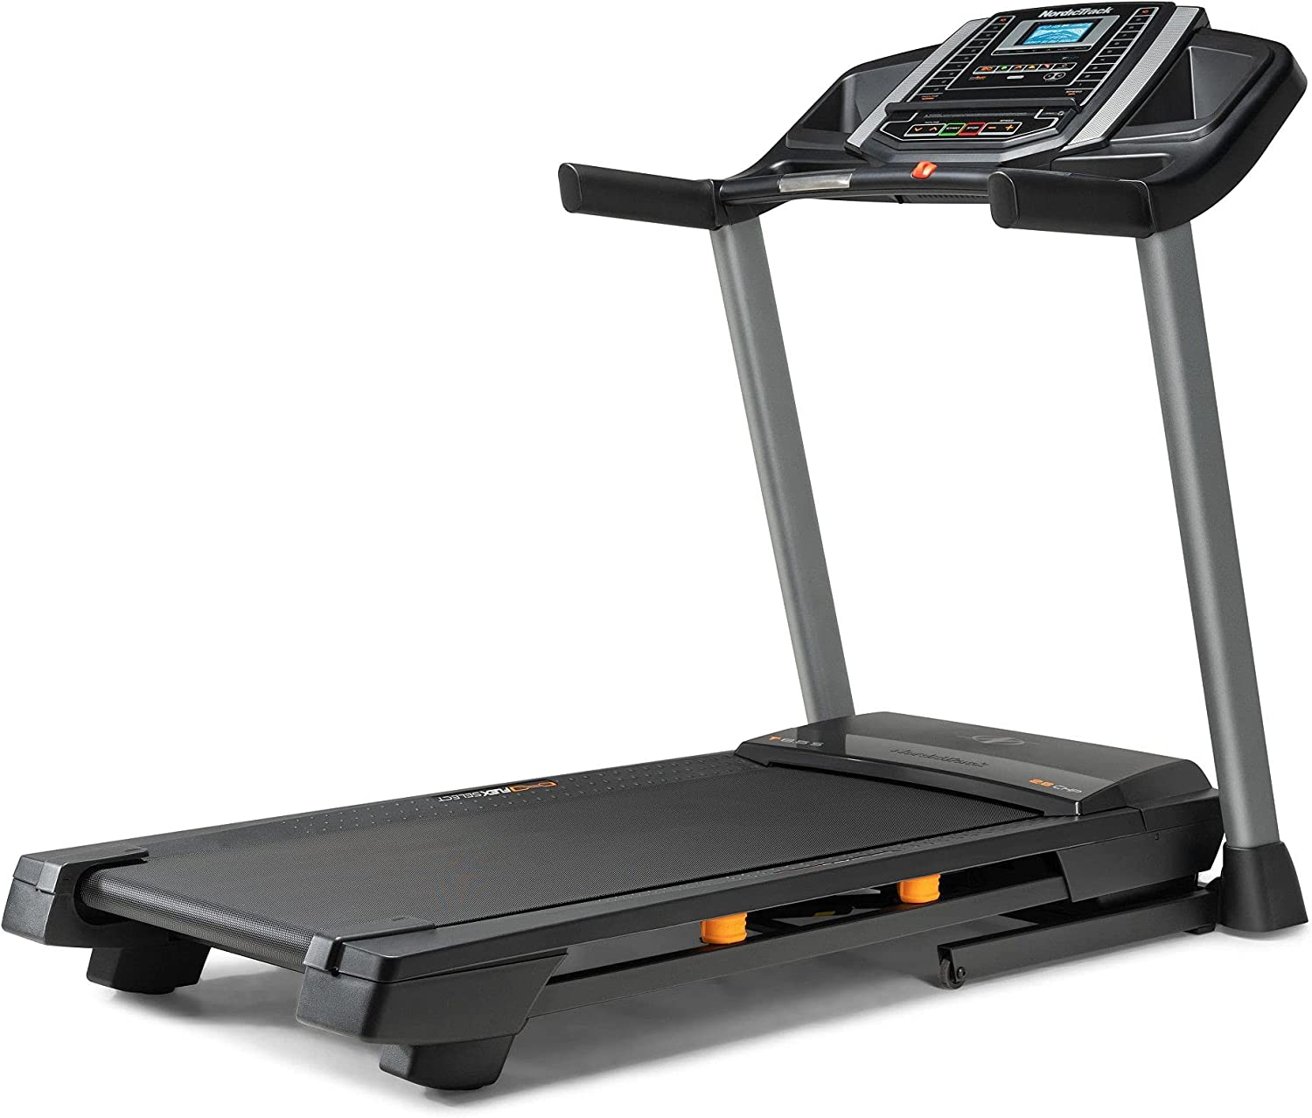 NordicTrack T series treadmill